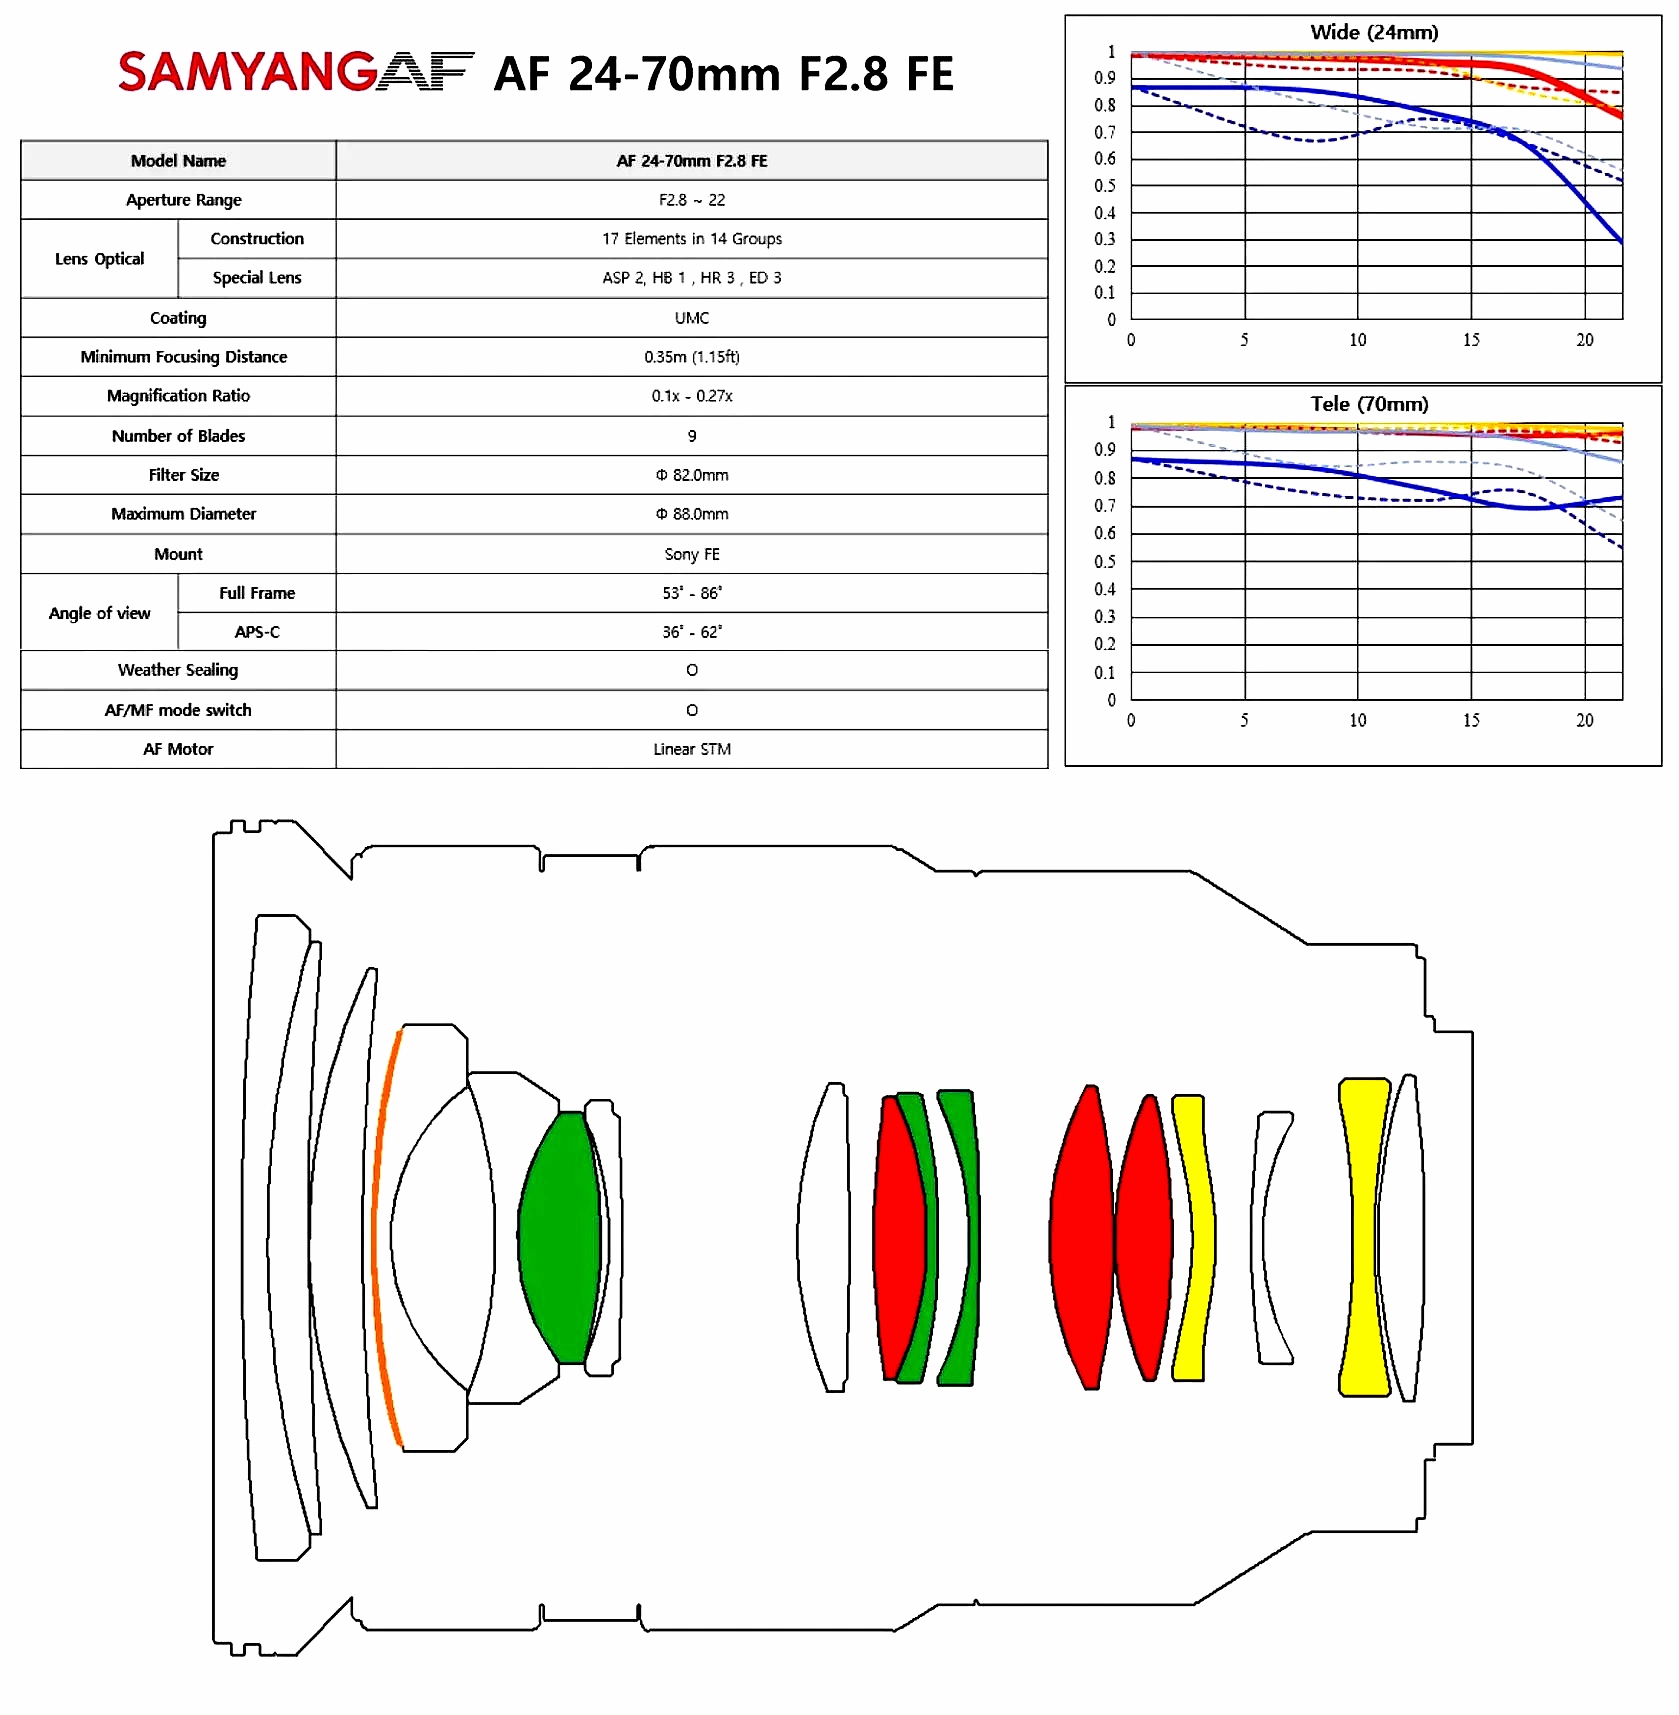 MTF-график и оптическая схема объектива Samyang AF 24-70mm f/2.8 FE